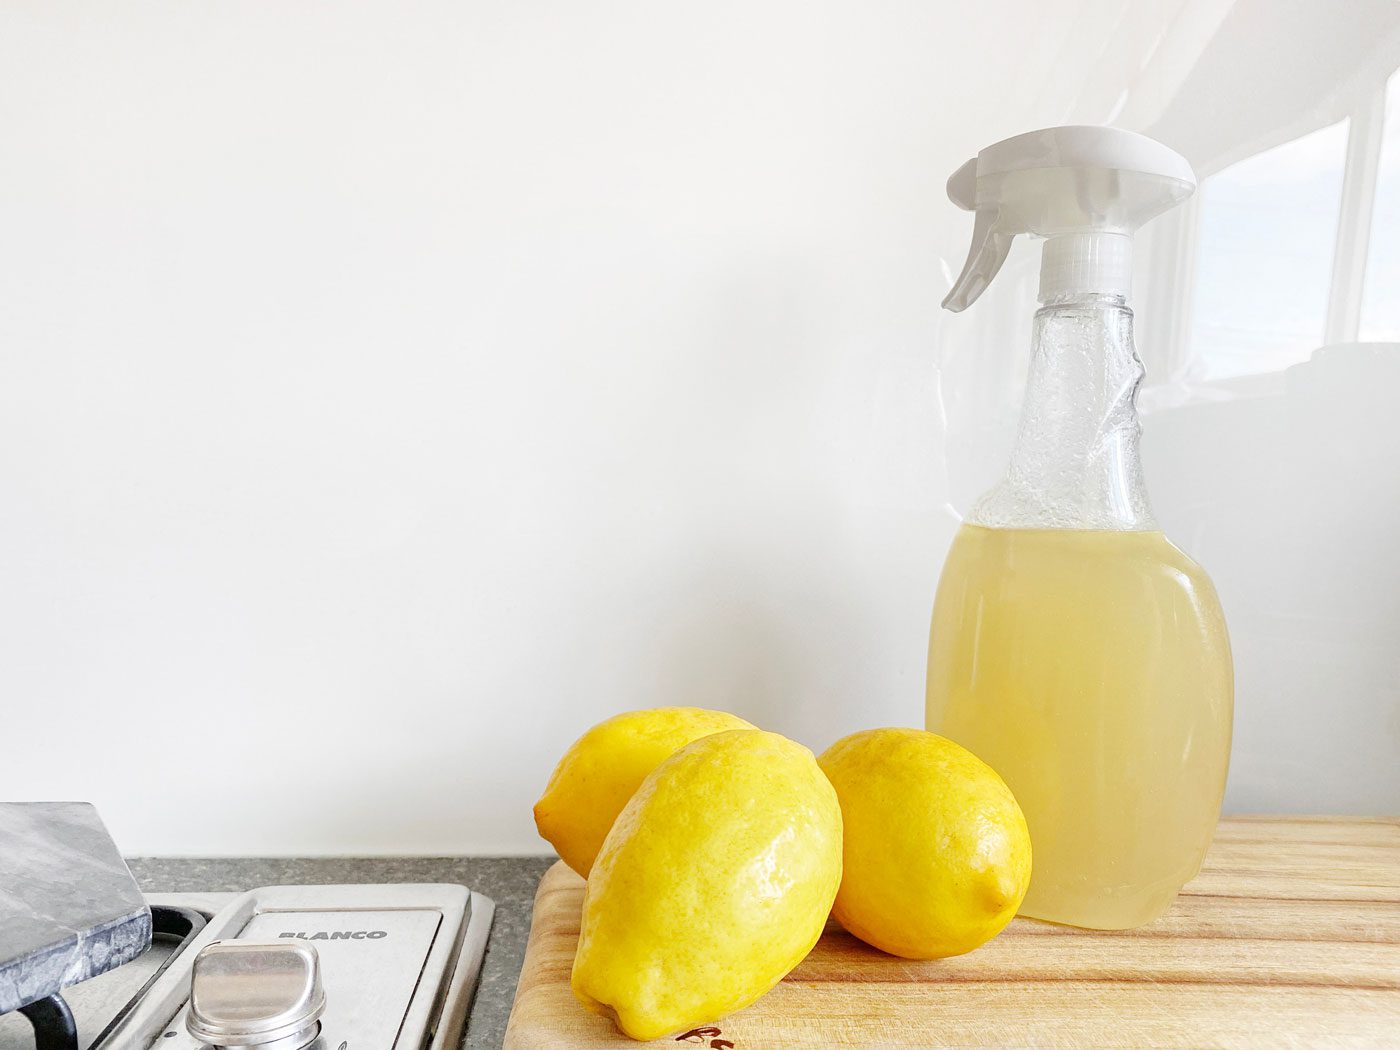 lemon cleaning spray